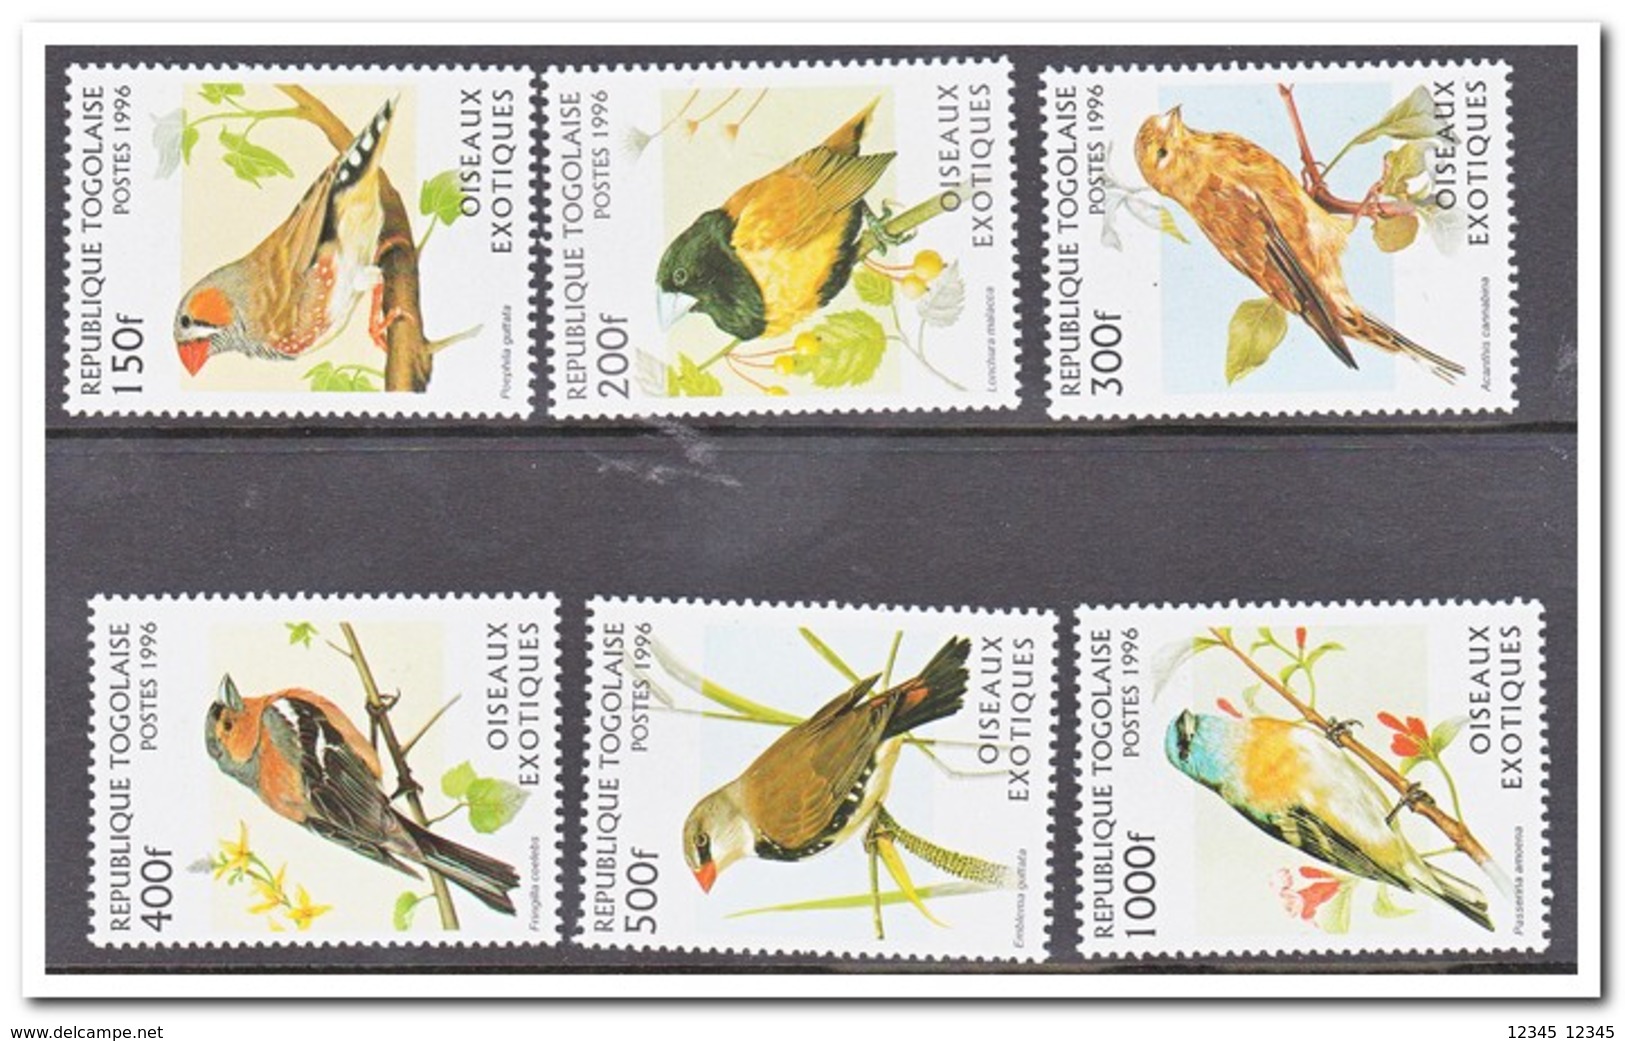 Togo 1996, Postfris MNH, Birds - Togo (1960-...)